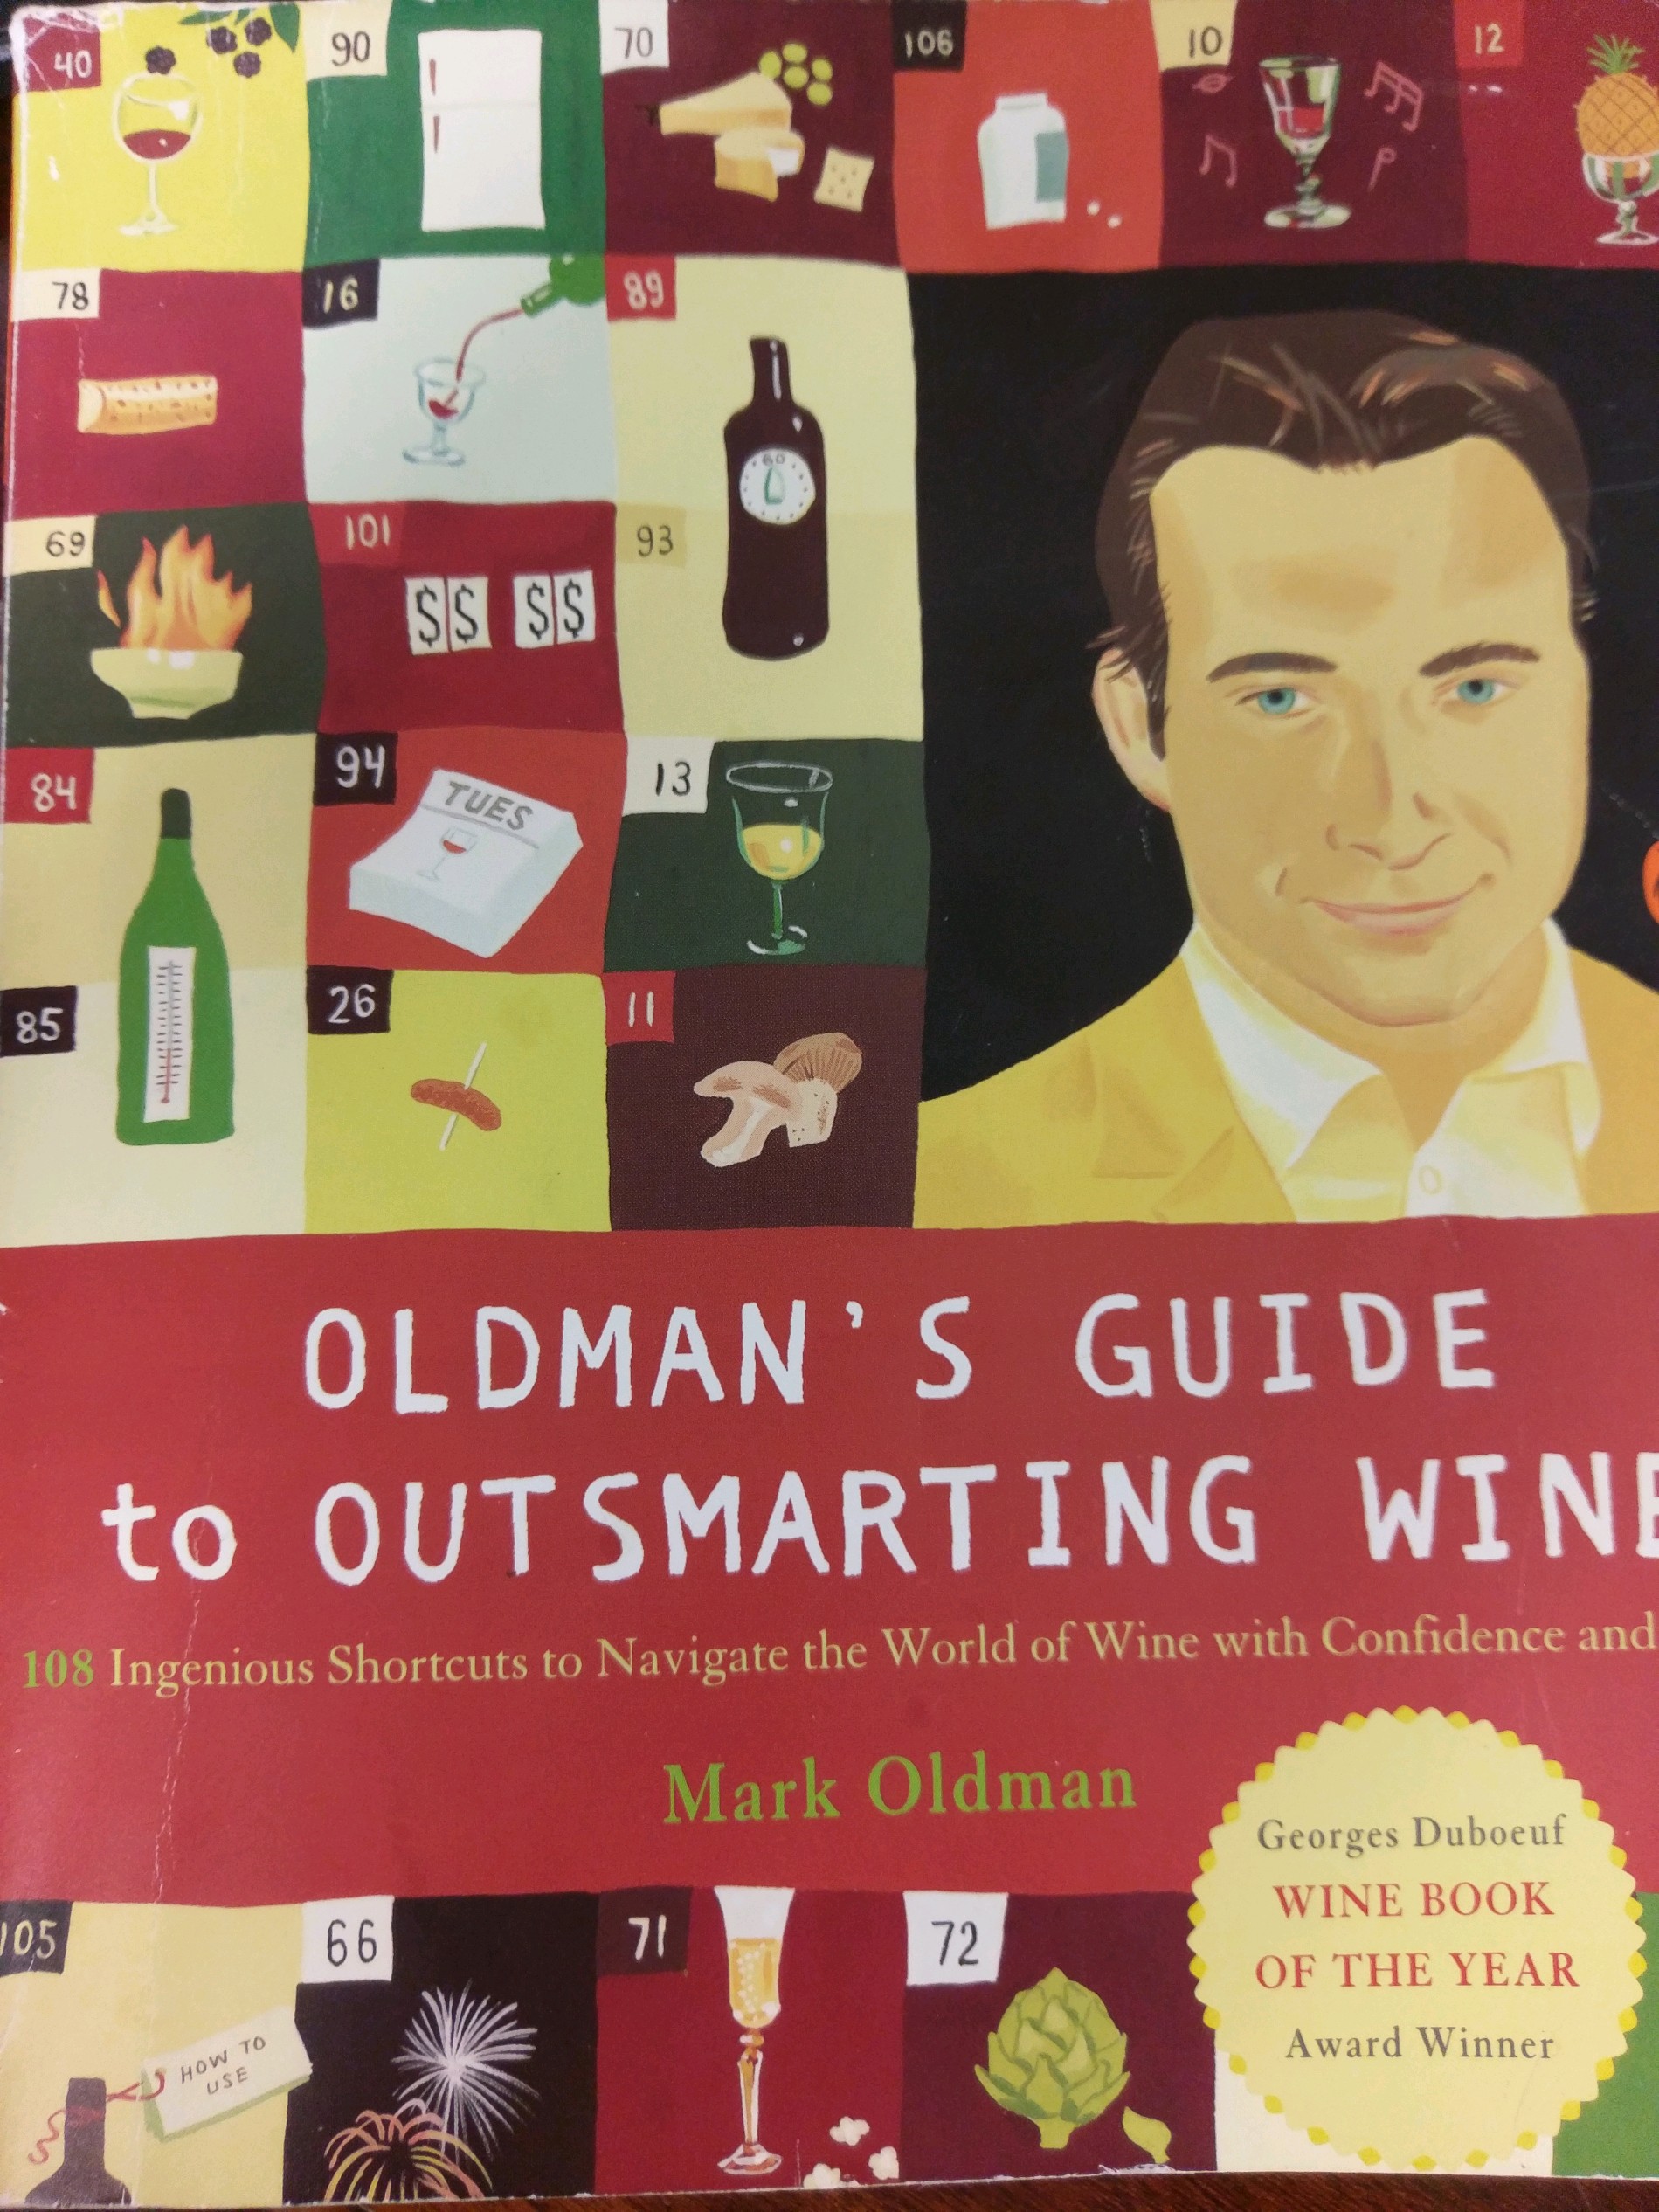 OldmansGuide, wine books